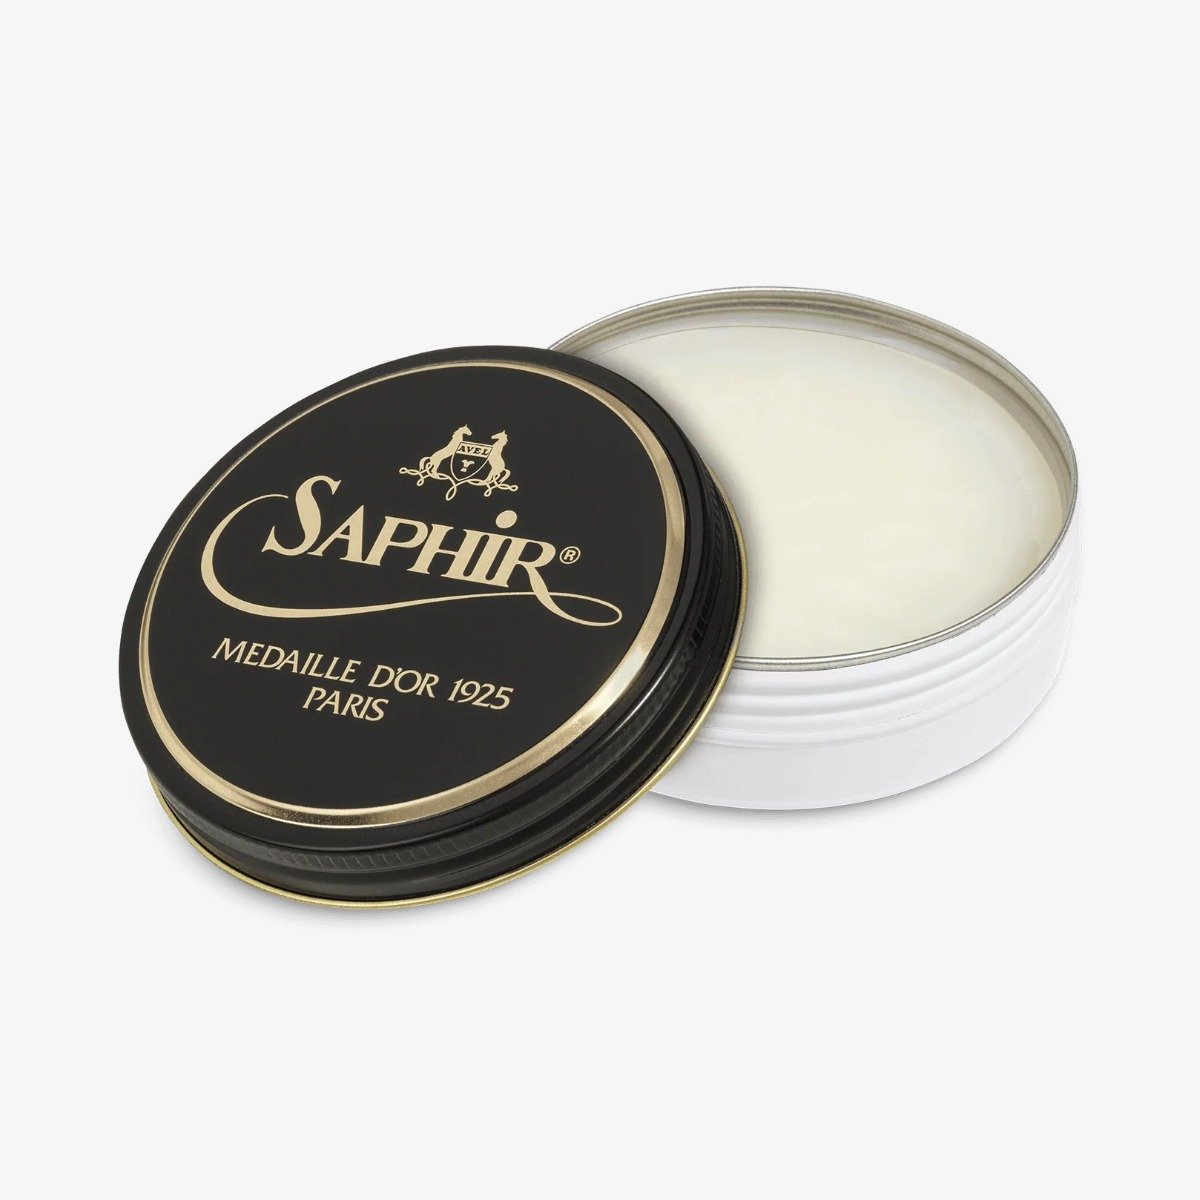 Saphir Pâte De Luxe neutral wax polish